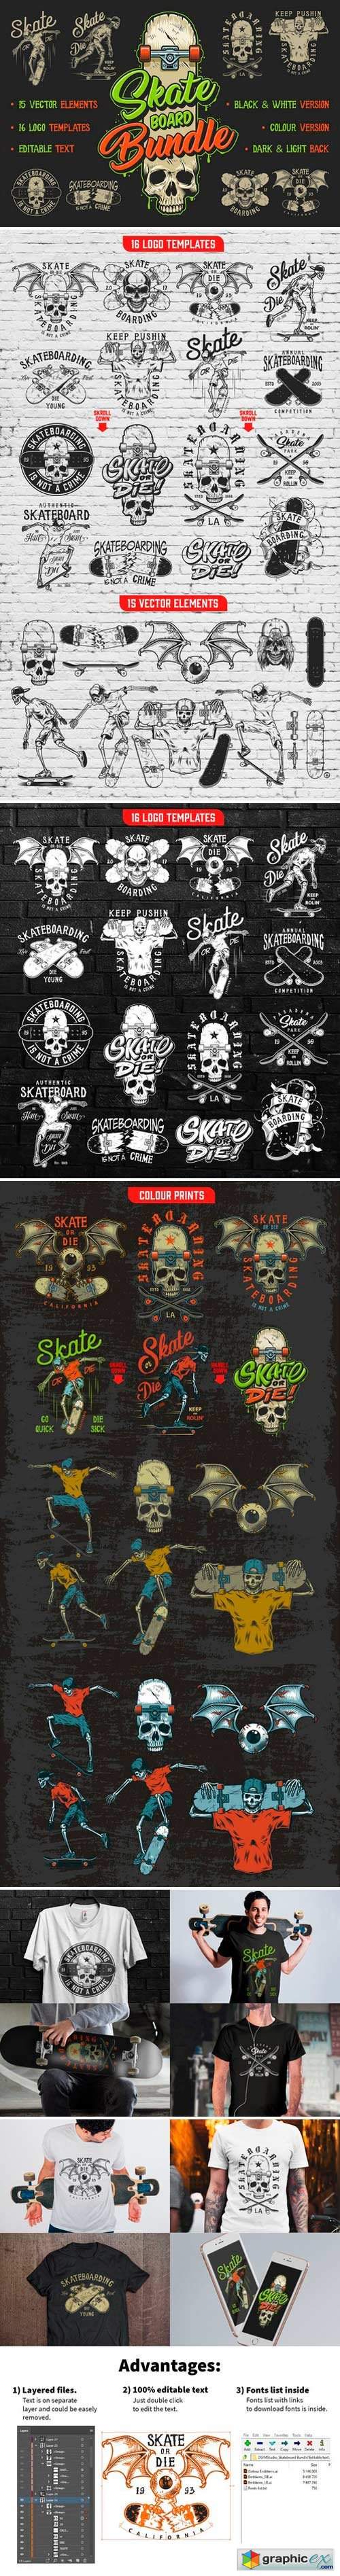 Skate board bundle